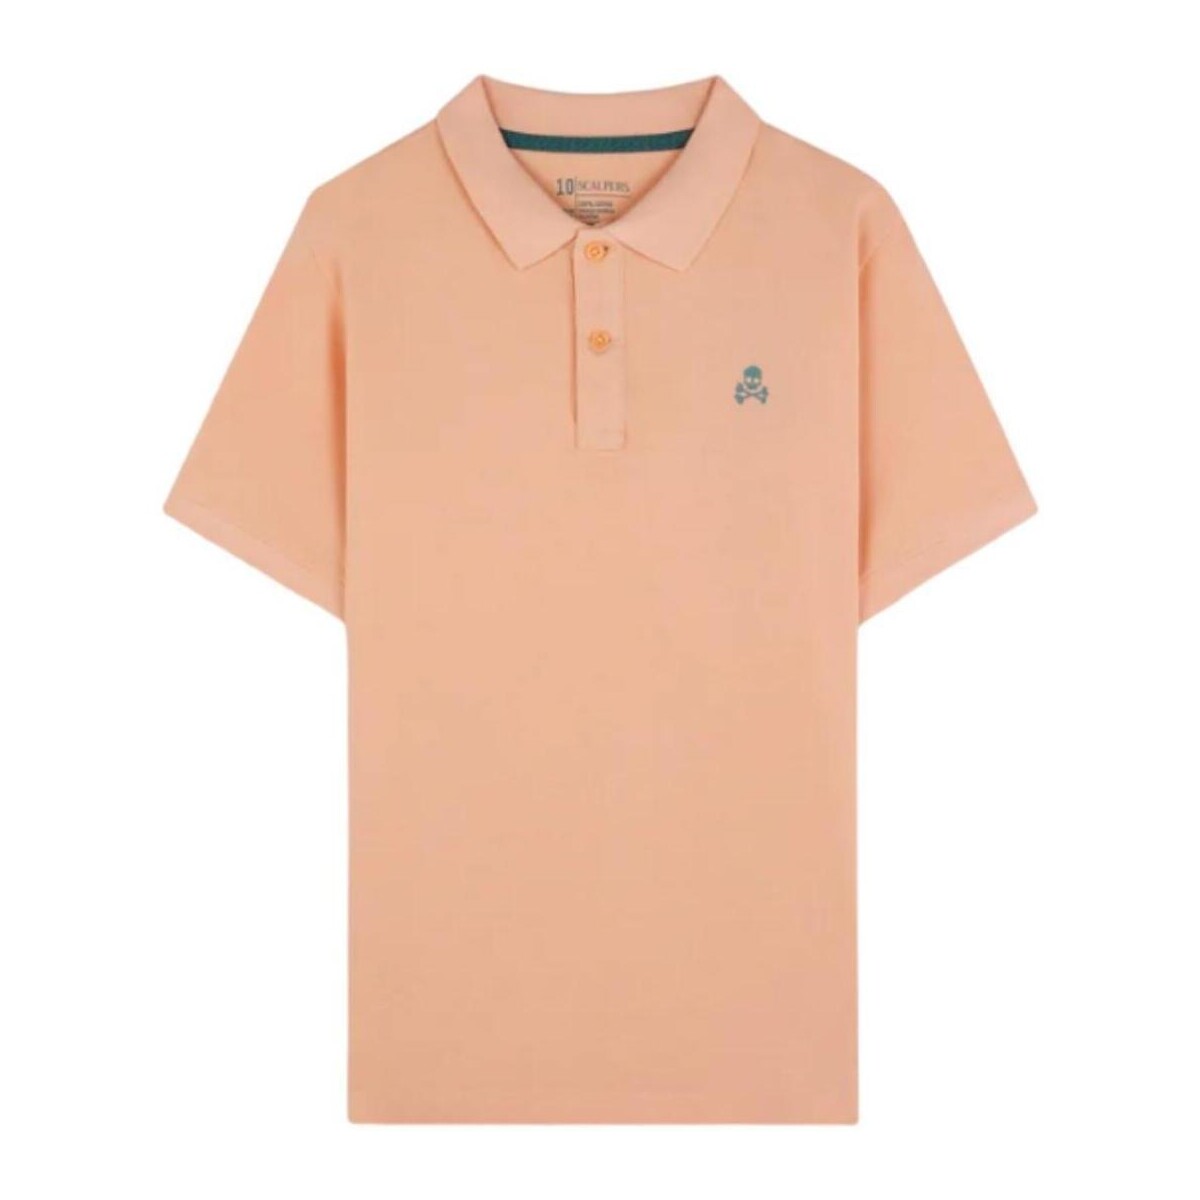 Textiel Jongens T-shirts korte mouwen Scalpers  Orange